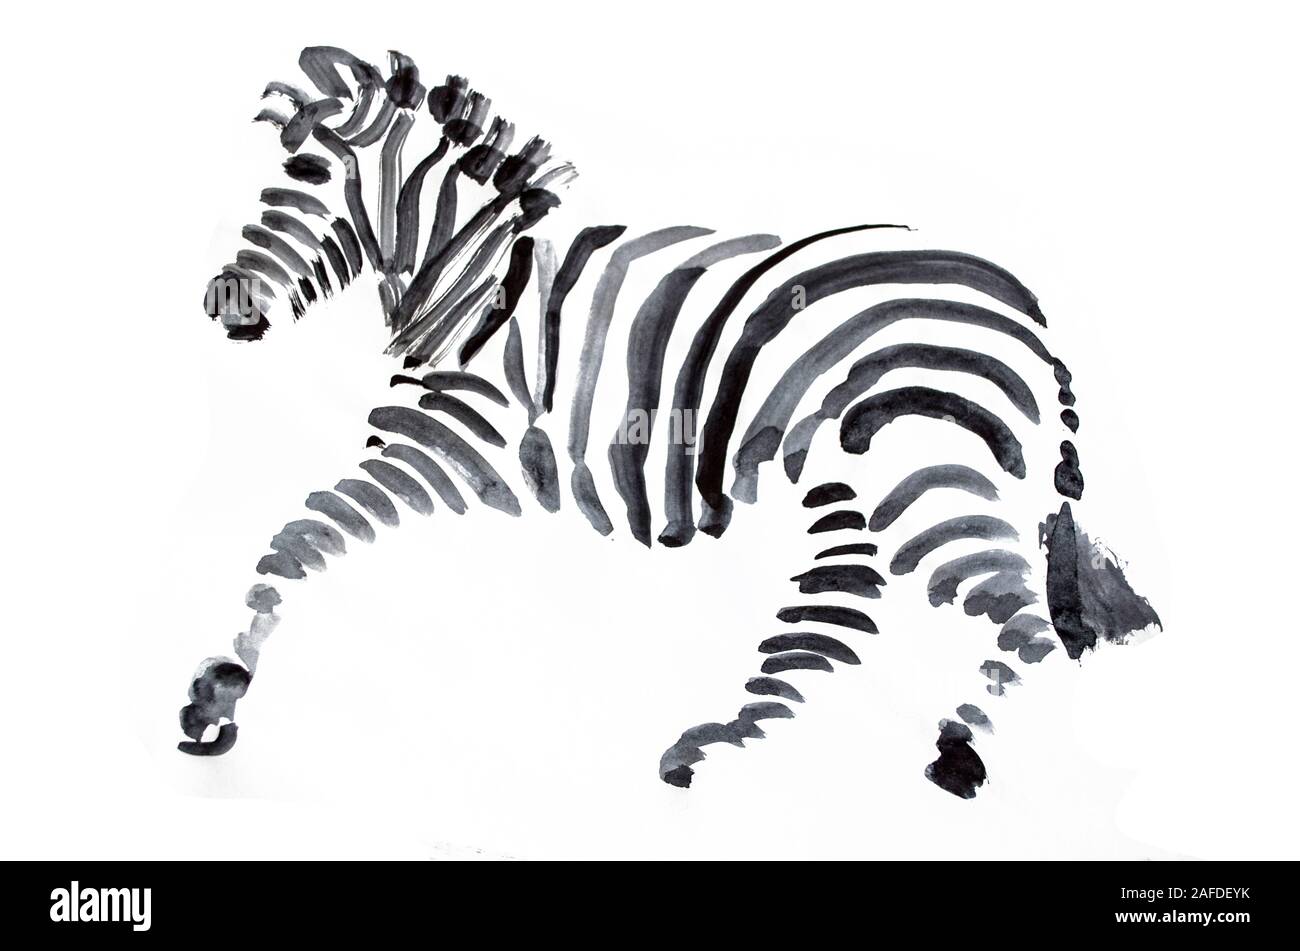 Zebra drawing with artistic black mascara. Animal sketch on white background. Stock Photo